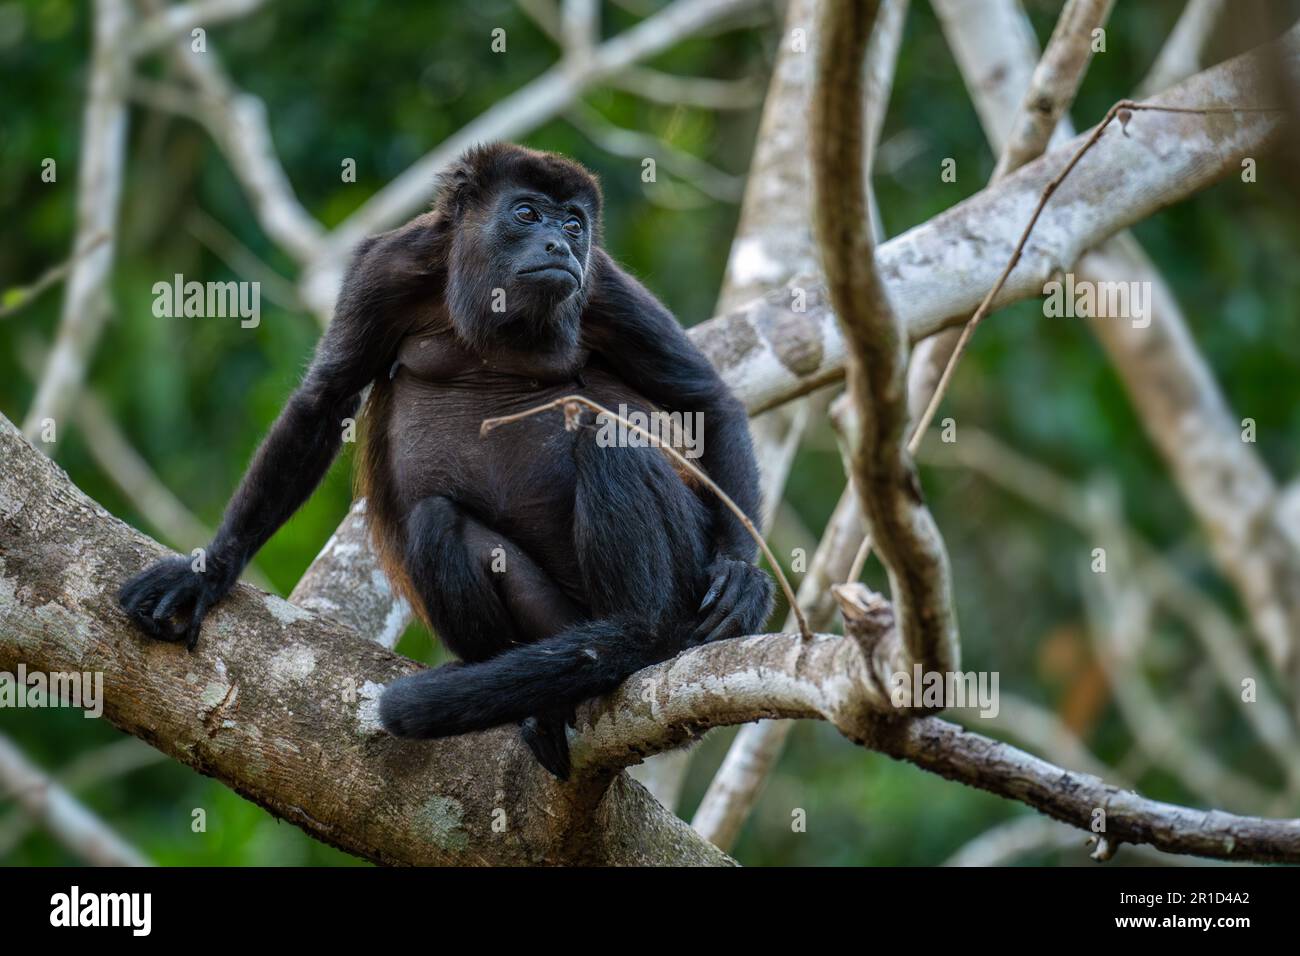 Mantled Howler Monkey - Alouatta palliata, beautiful noisy primate from Latin America forests and woodlands, Gamboa, Panama. Stock Photo